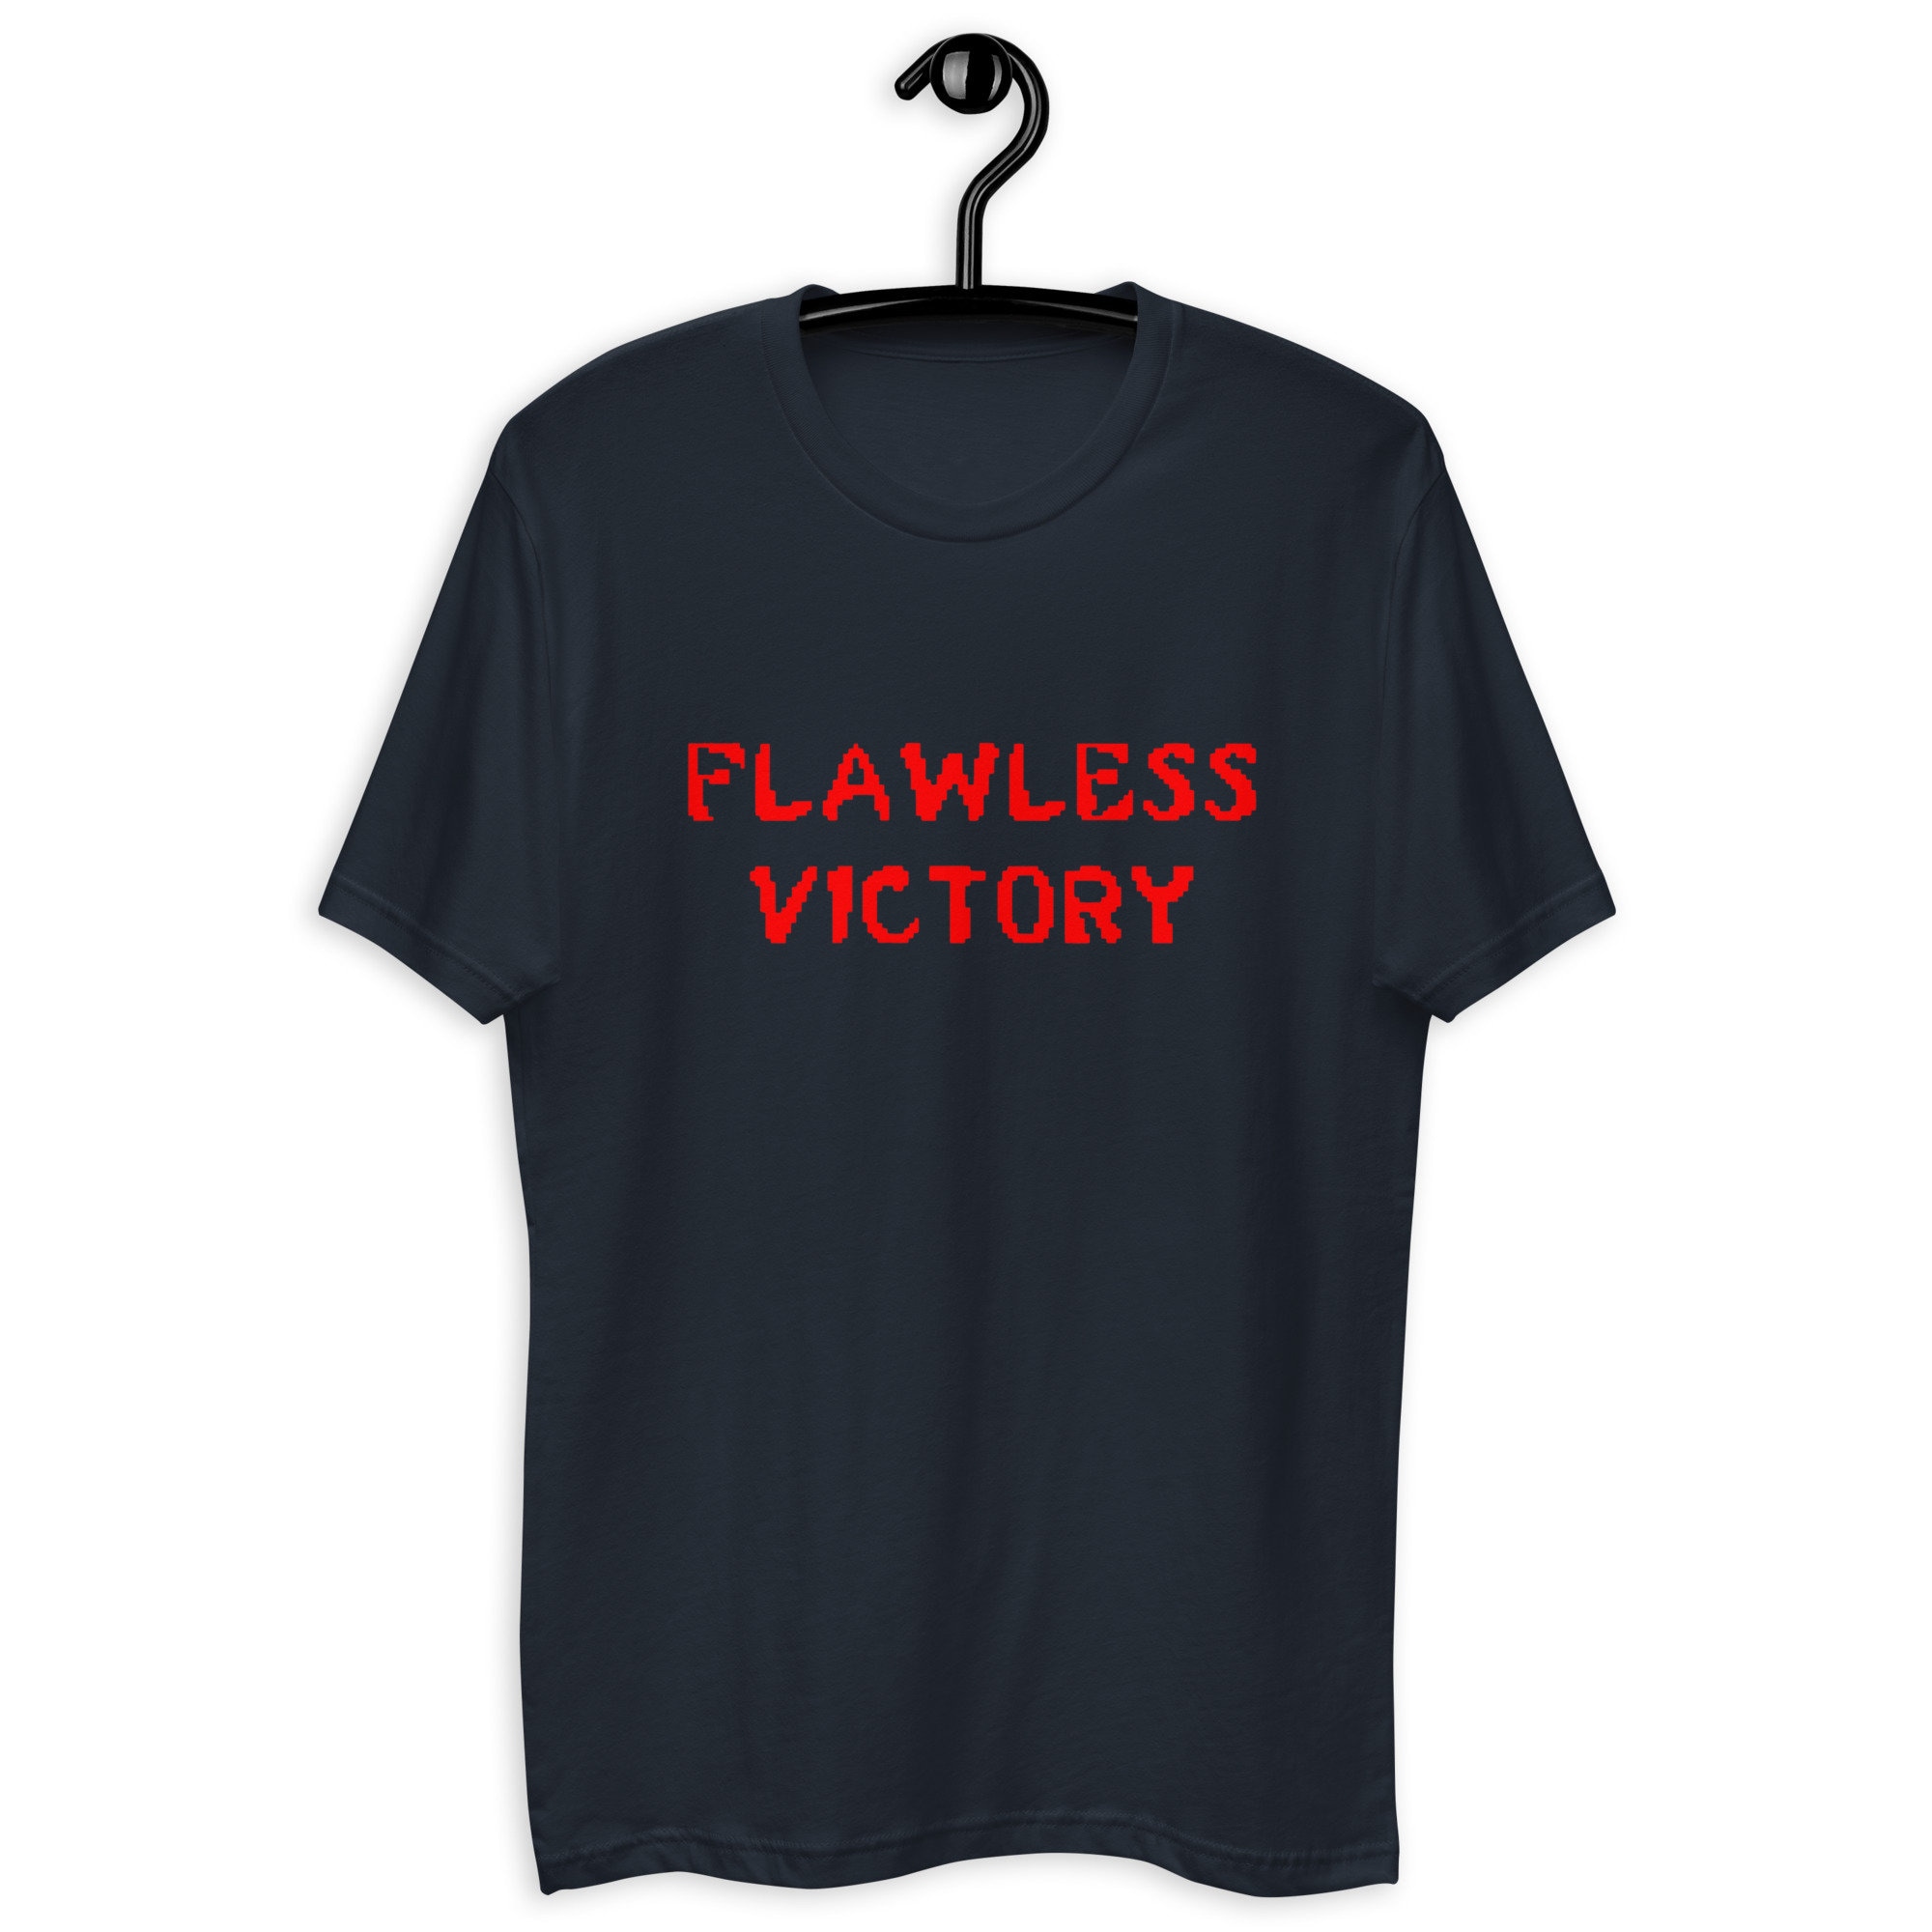 Flawless victory : r/gif